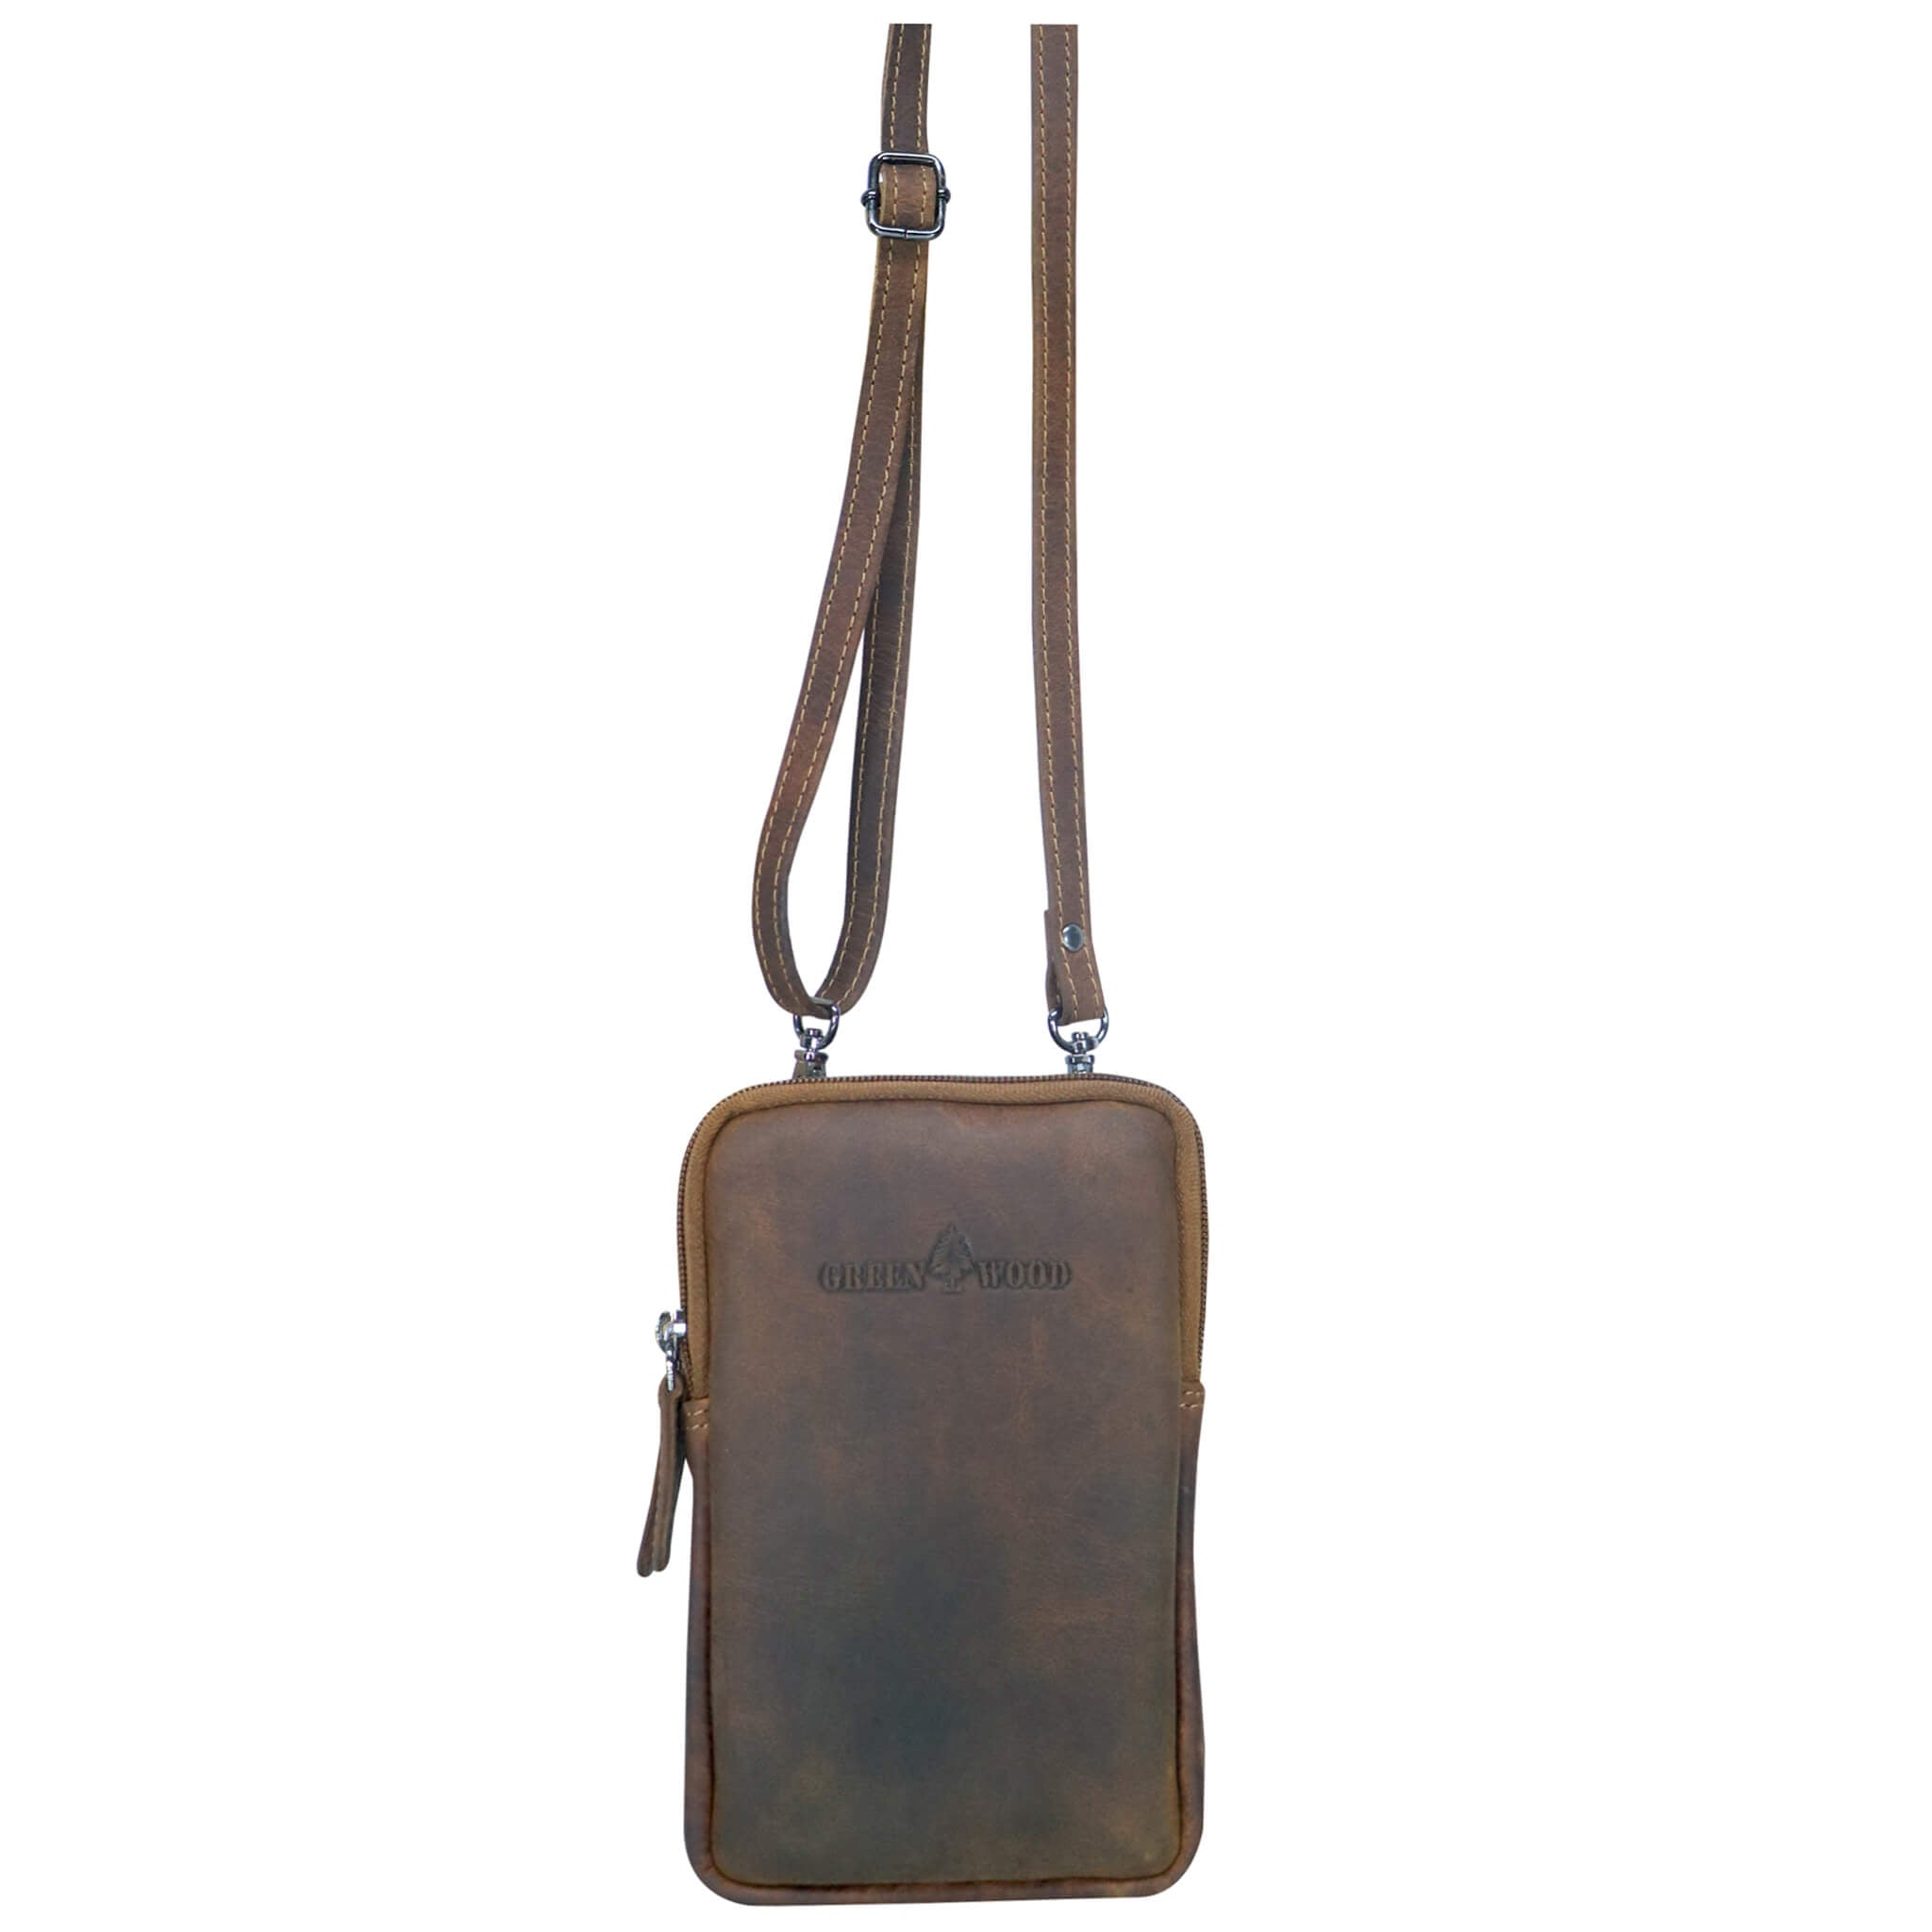 Oli Phone Bag with Zipper Leather Women Crossbody Mini Bag